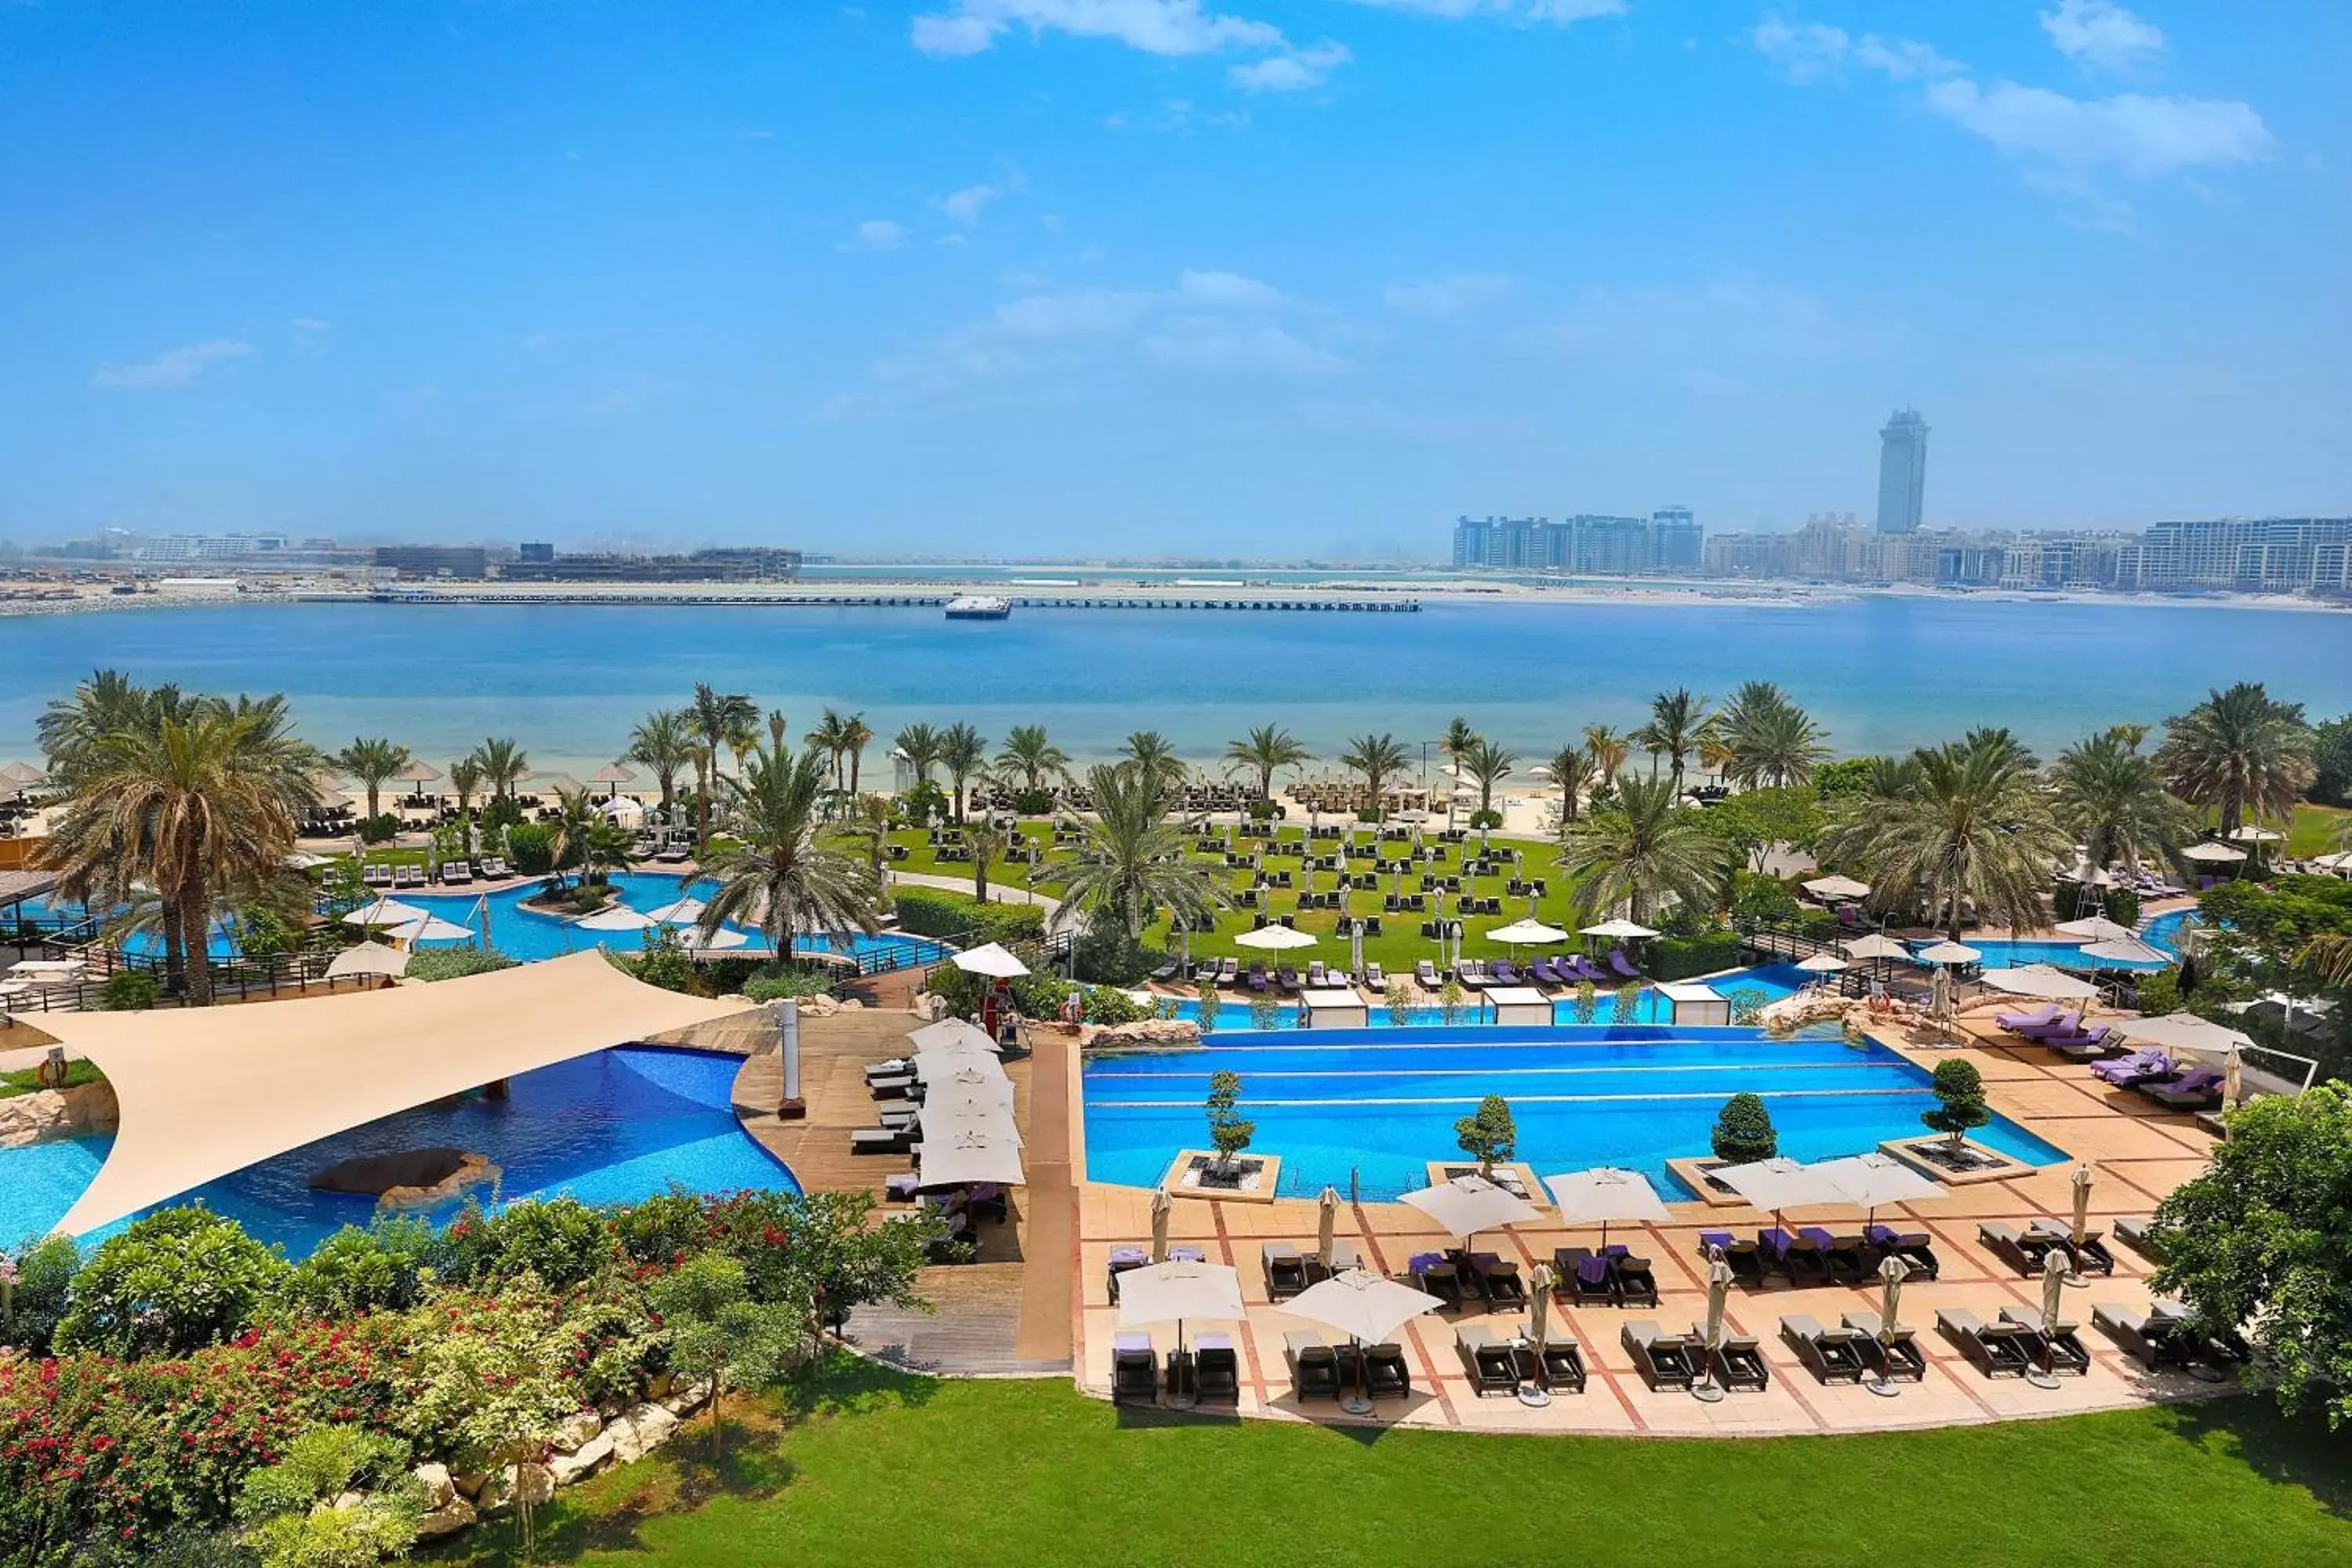 Photo of the whole room, Pool View in The Westin Dubai Mina Seyahi Beach Resort and Waterpark